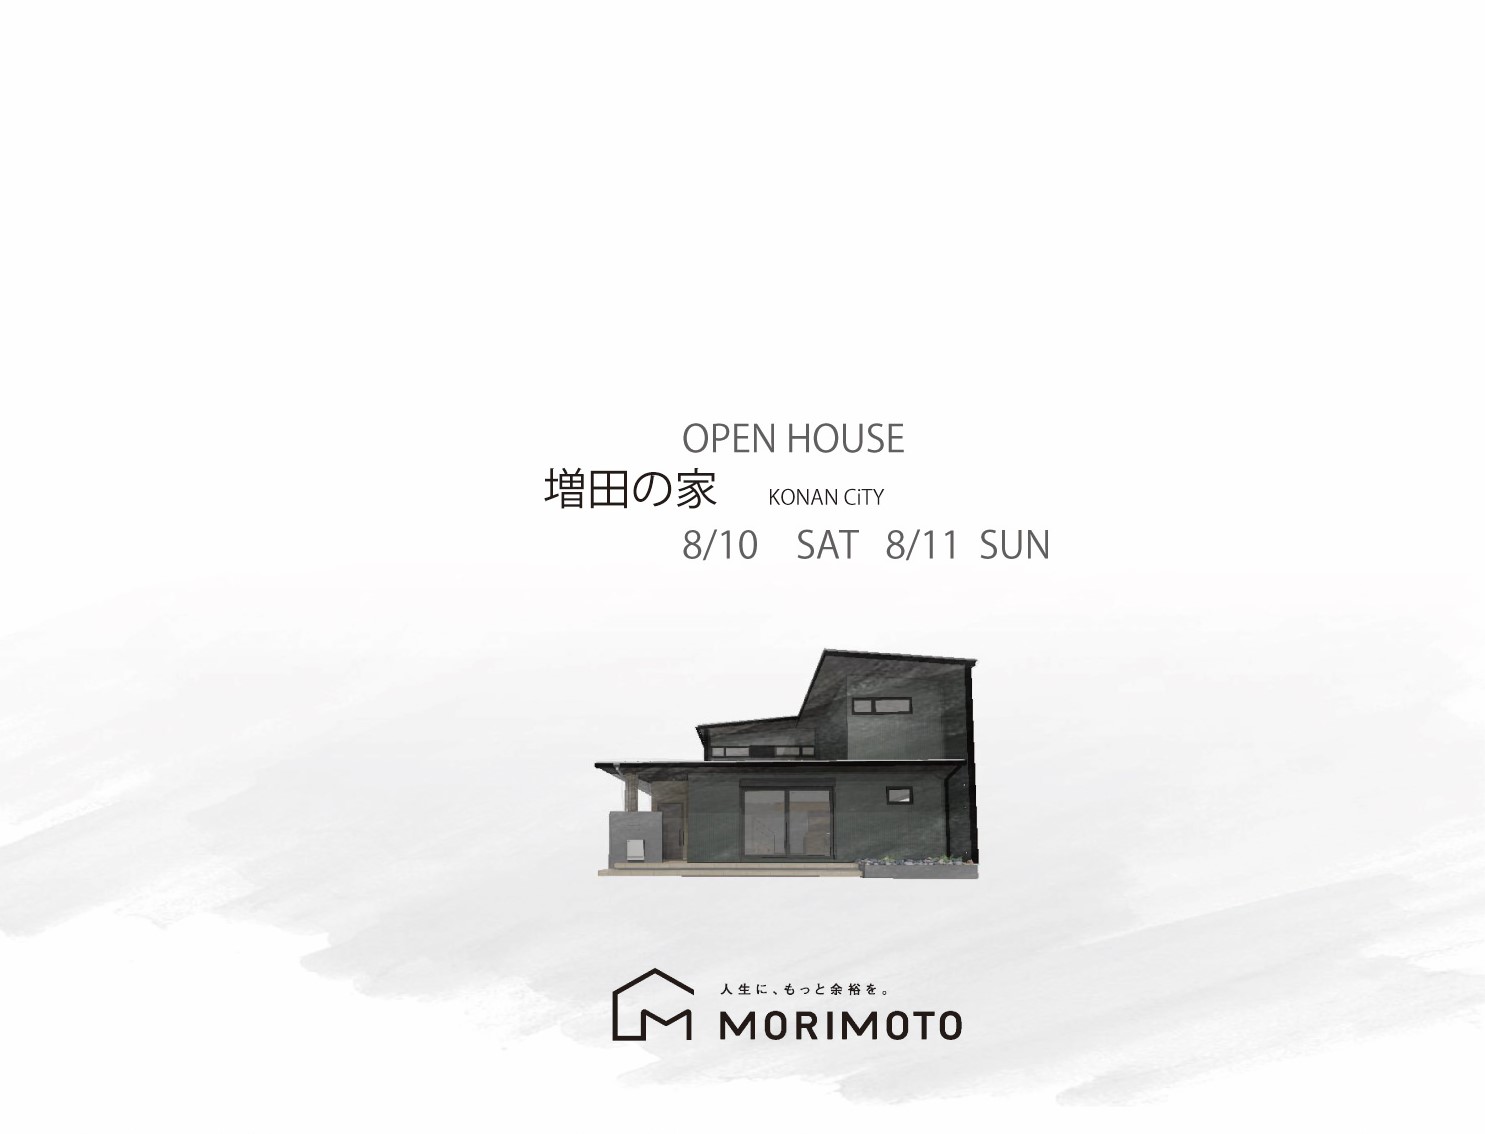 OPEN HOUSE 　増田の家　香南市　８月10日(土)～8月11日(日)